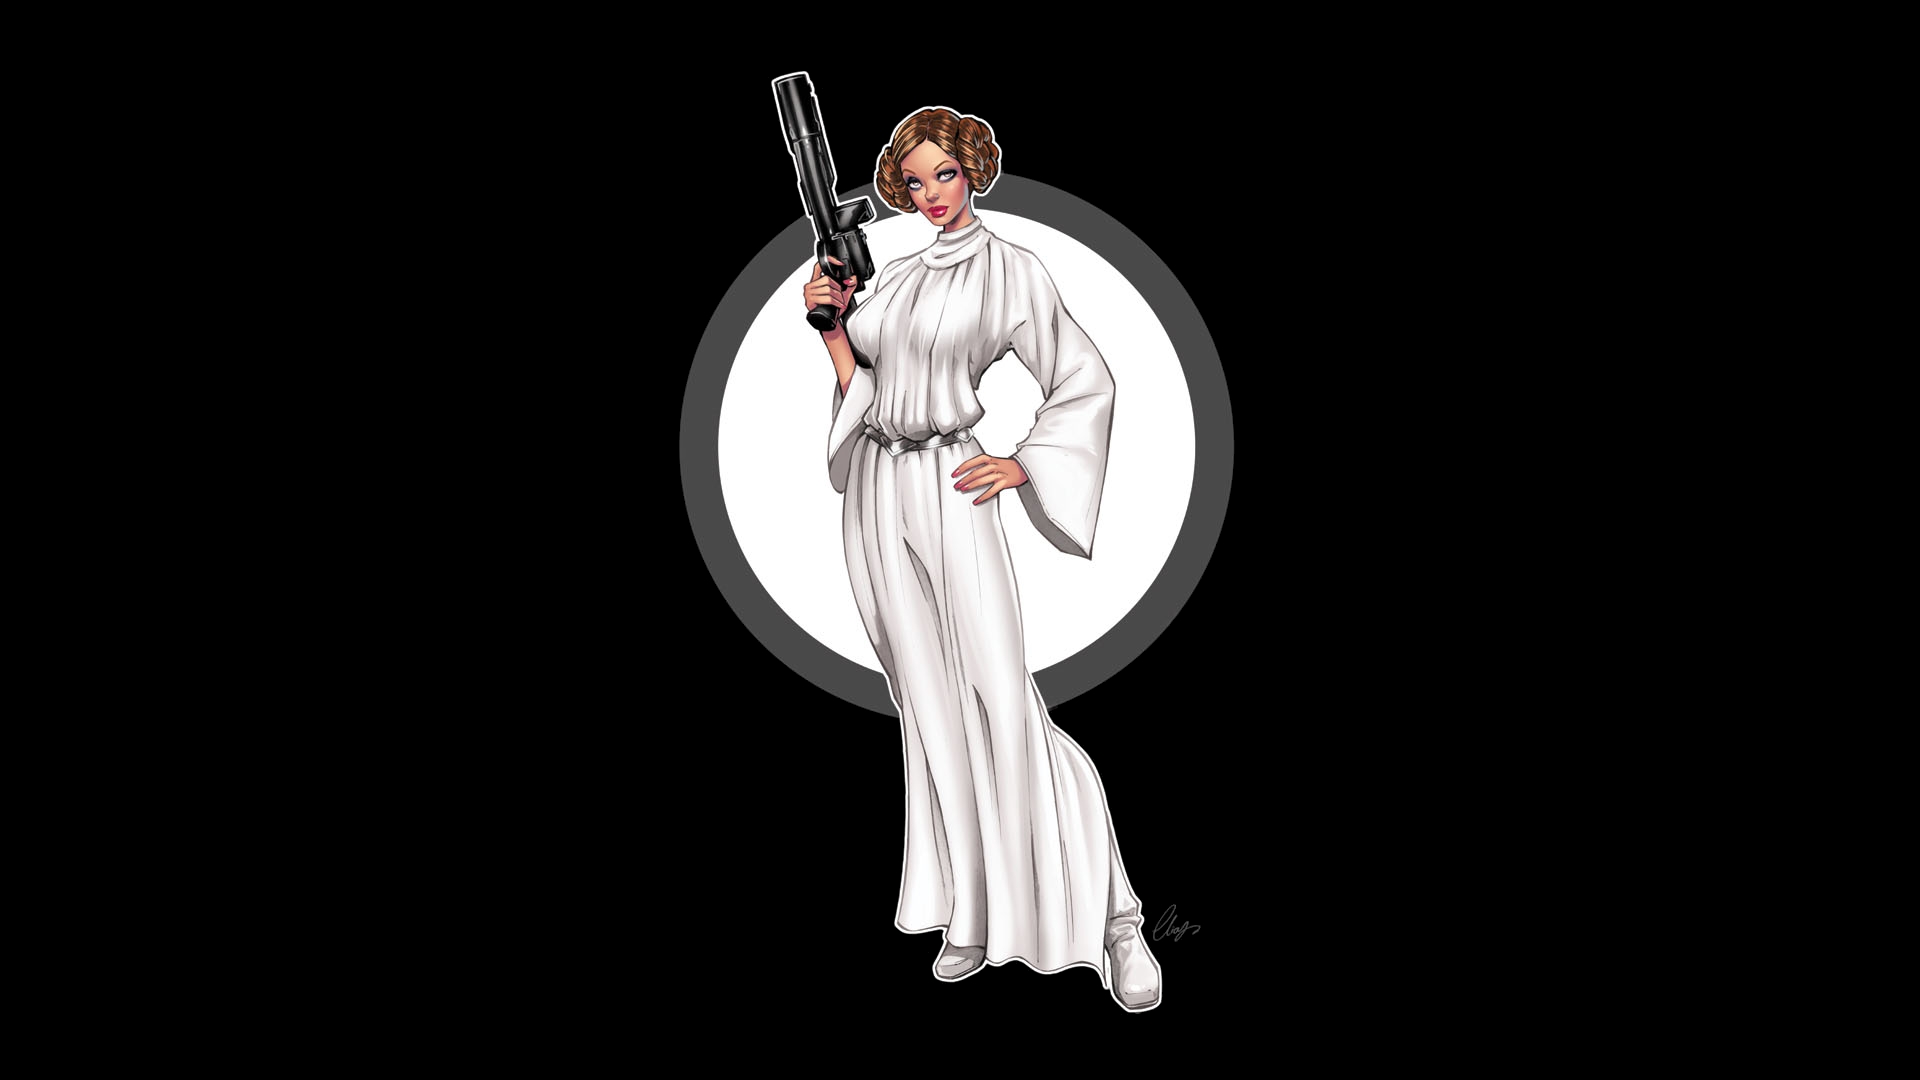 Sci Fi Star Wars Princess Leia Wallpaper